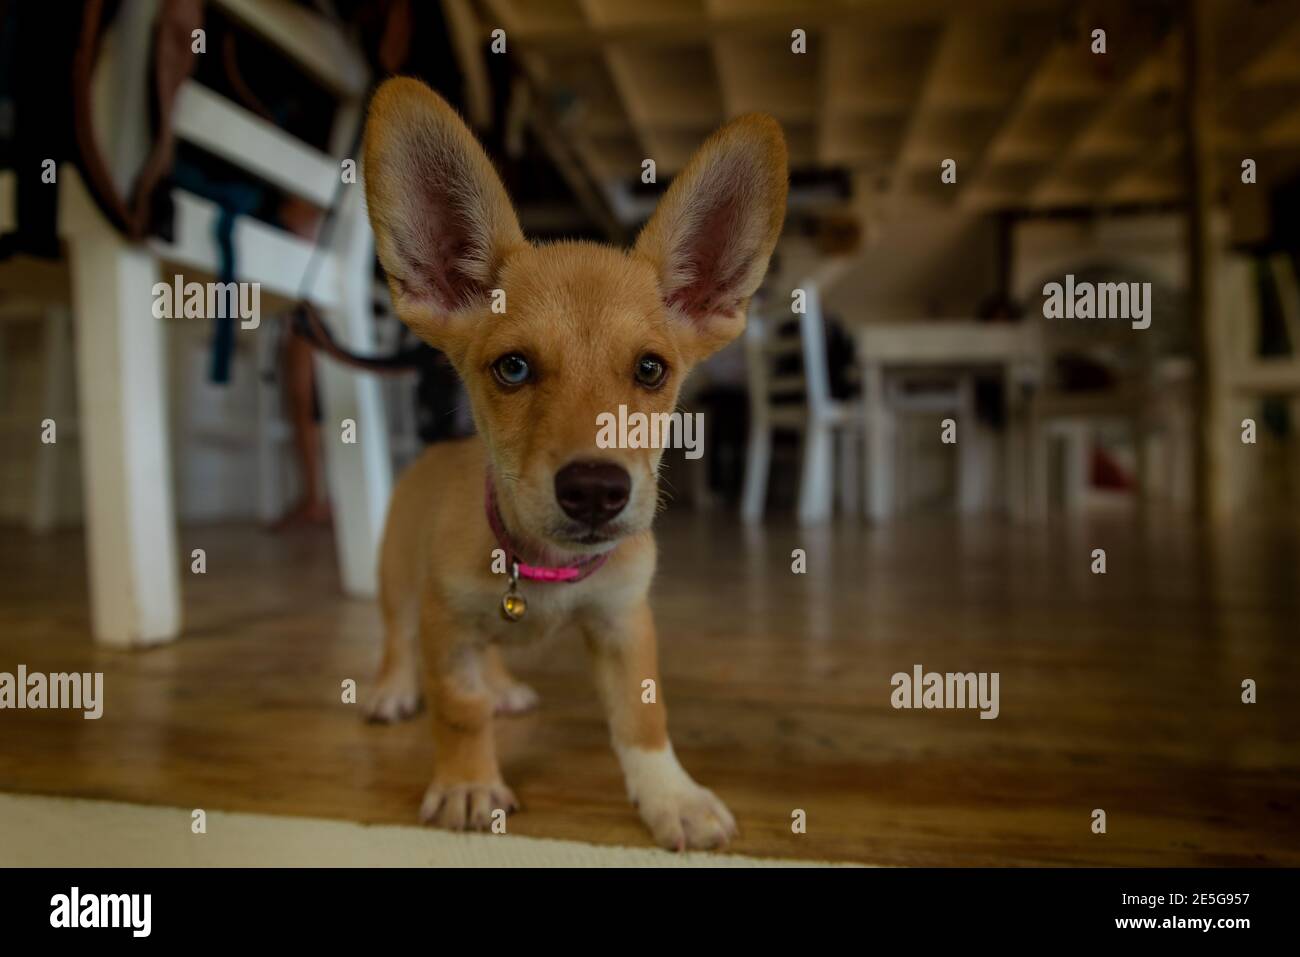 Lustige Hund Welpen Whit Sehr Große Ohren Stockfotografie - Alamy